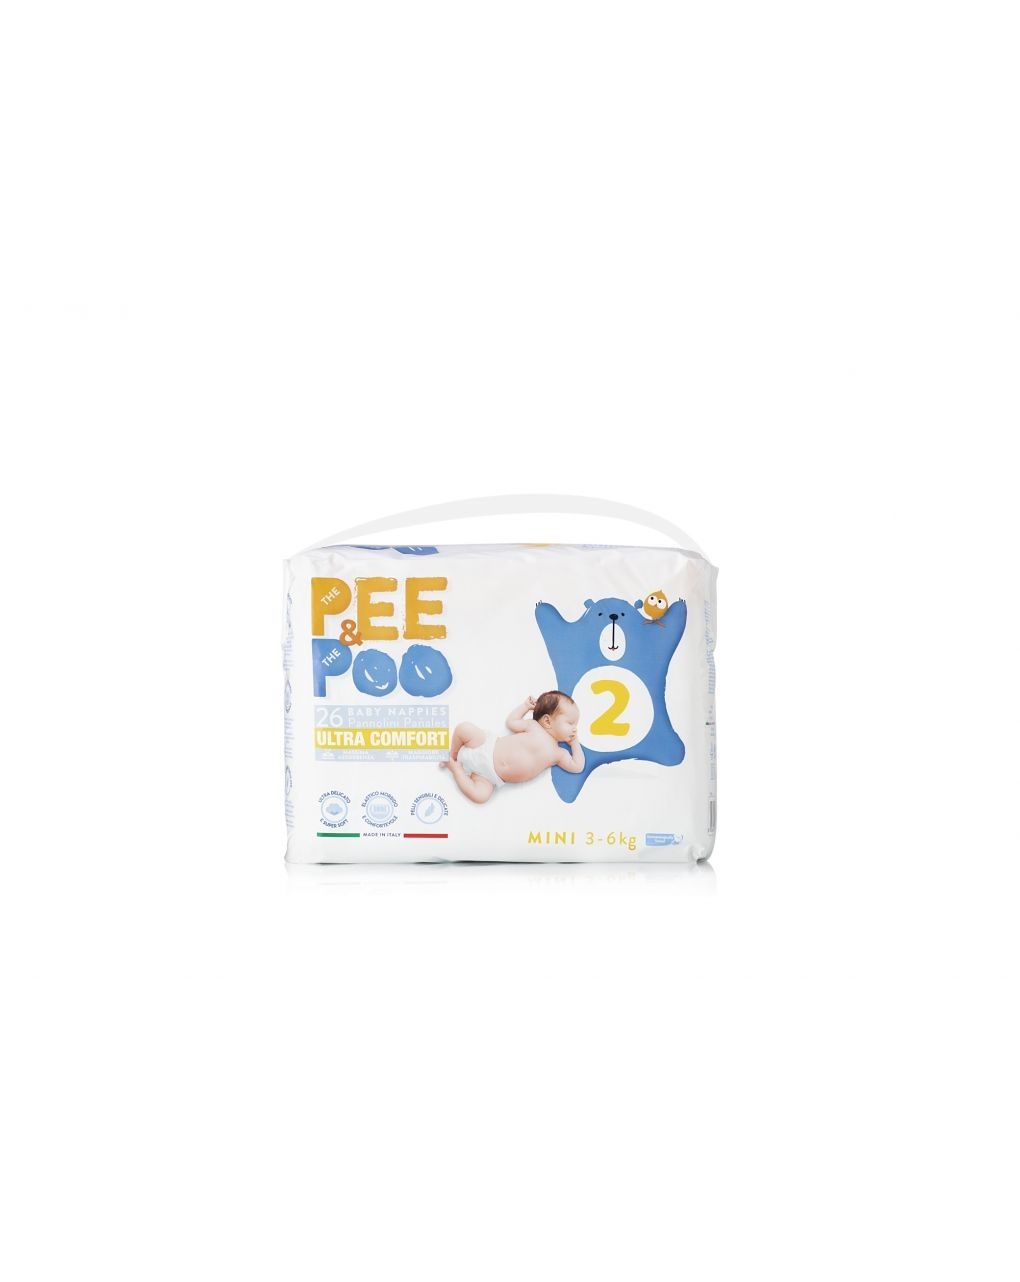 Pee&poo - mini t. 2 26 uds. - The Pee & The Poo